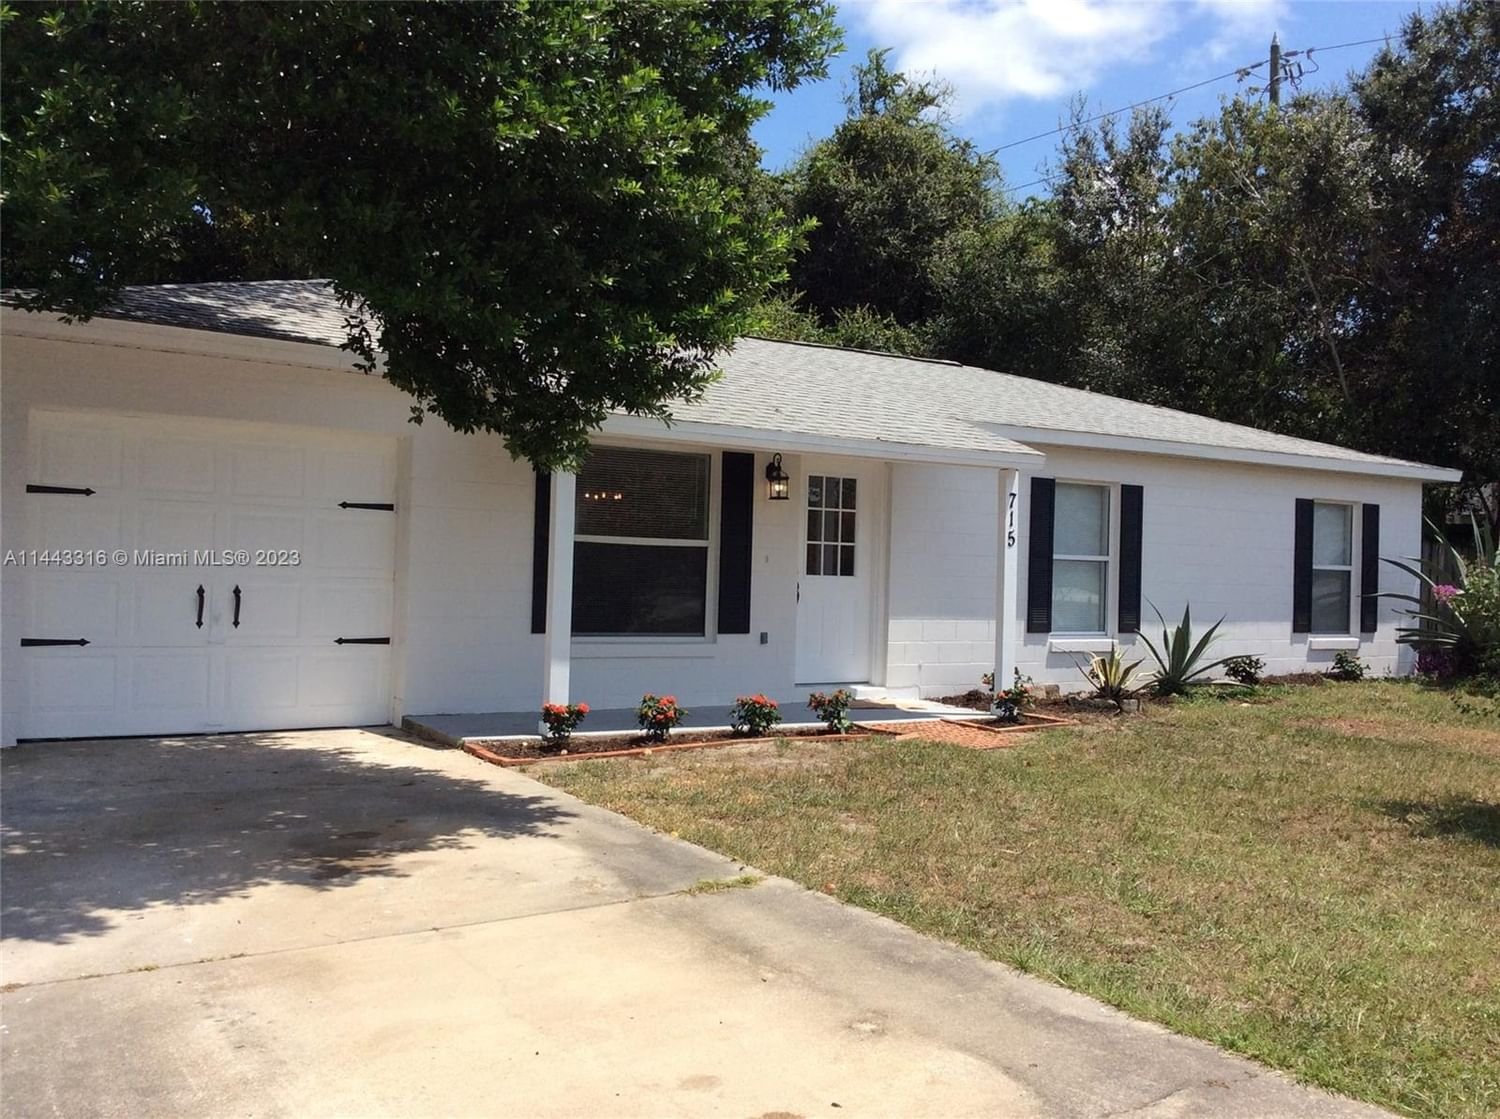 Real estate property located at 715 W Ludlum Dr, Volusia County, Deltona, FL